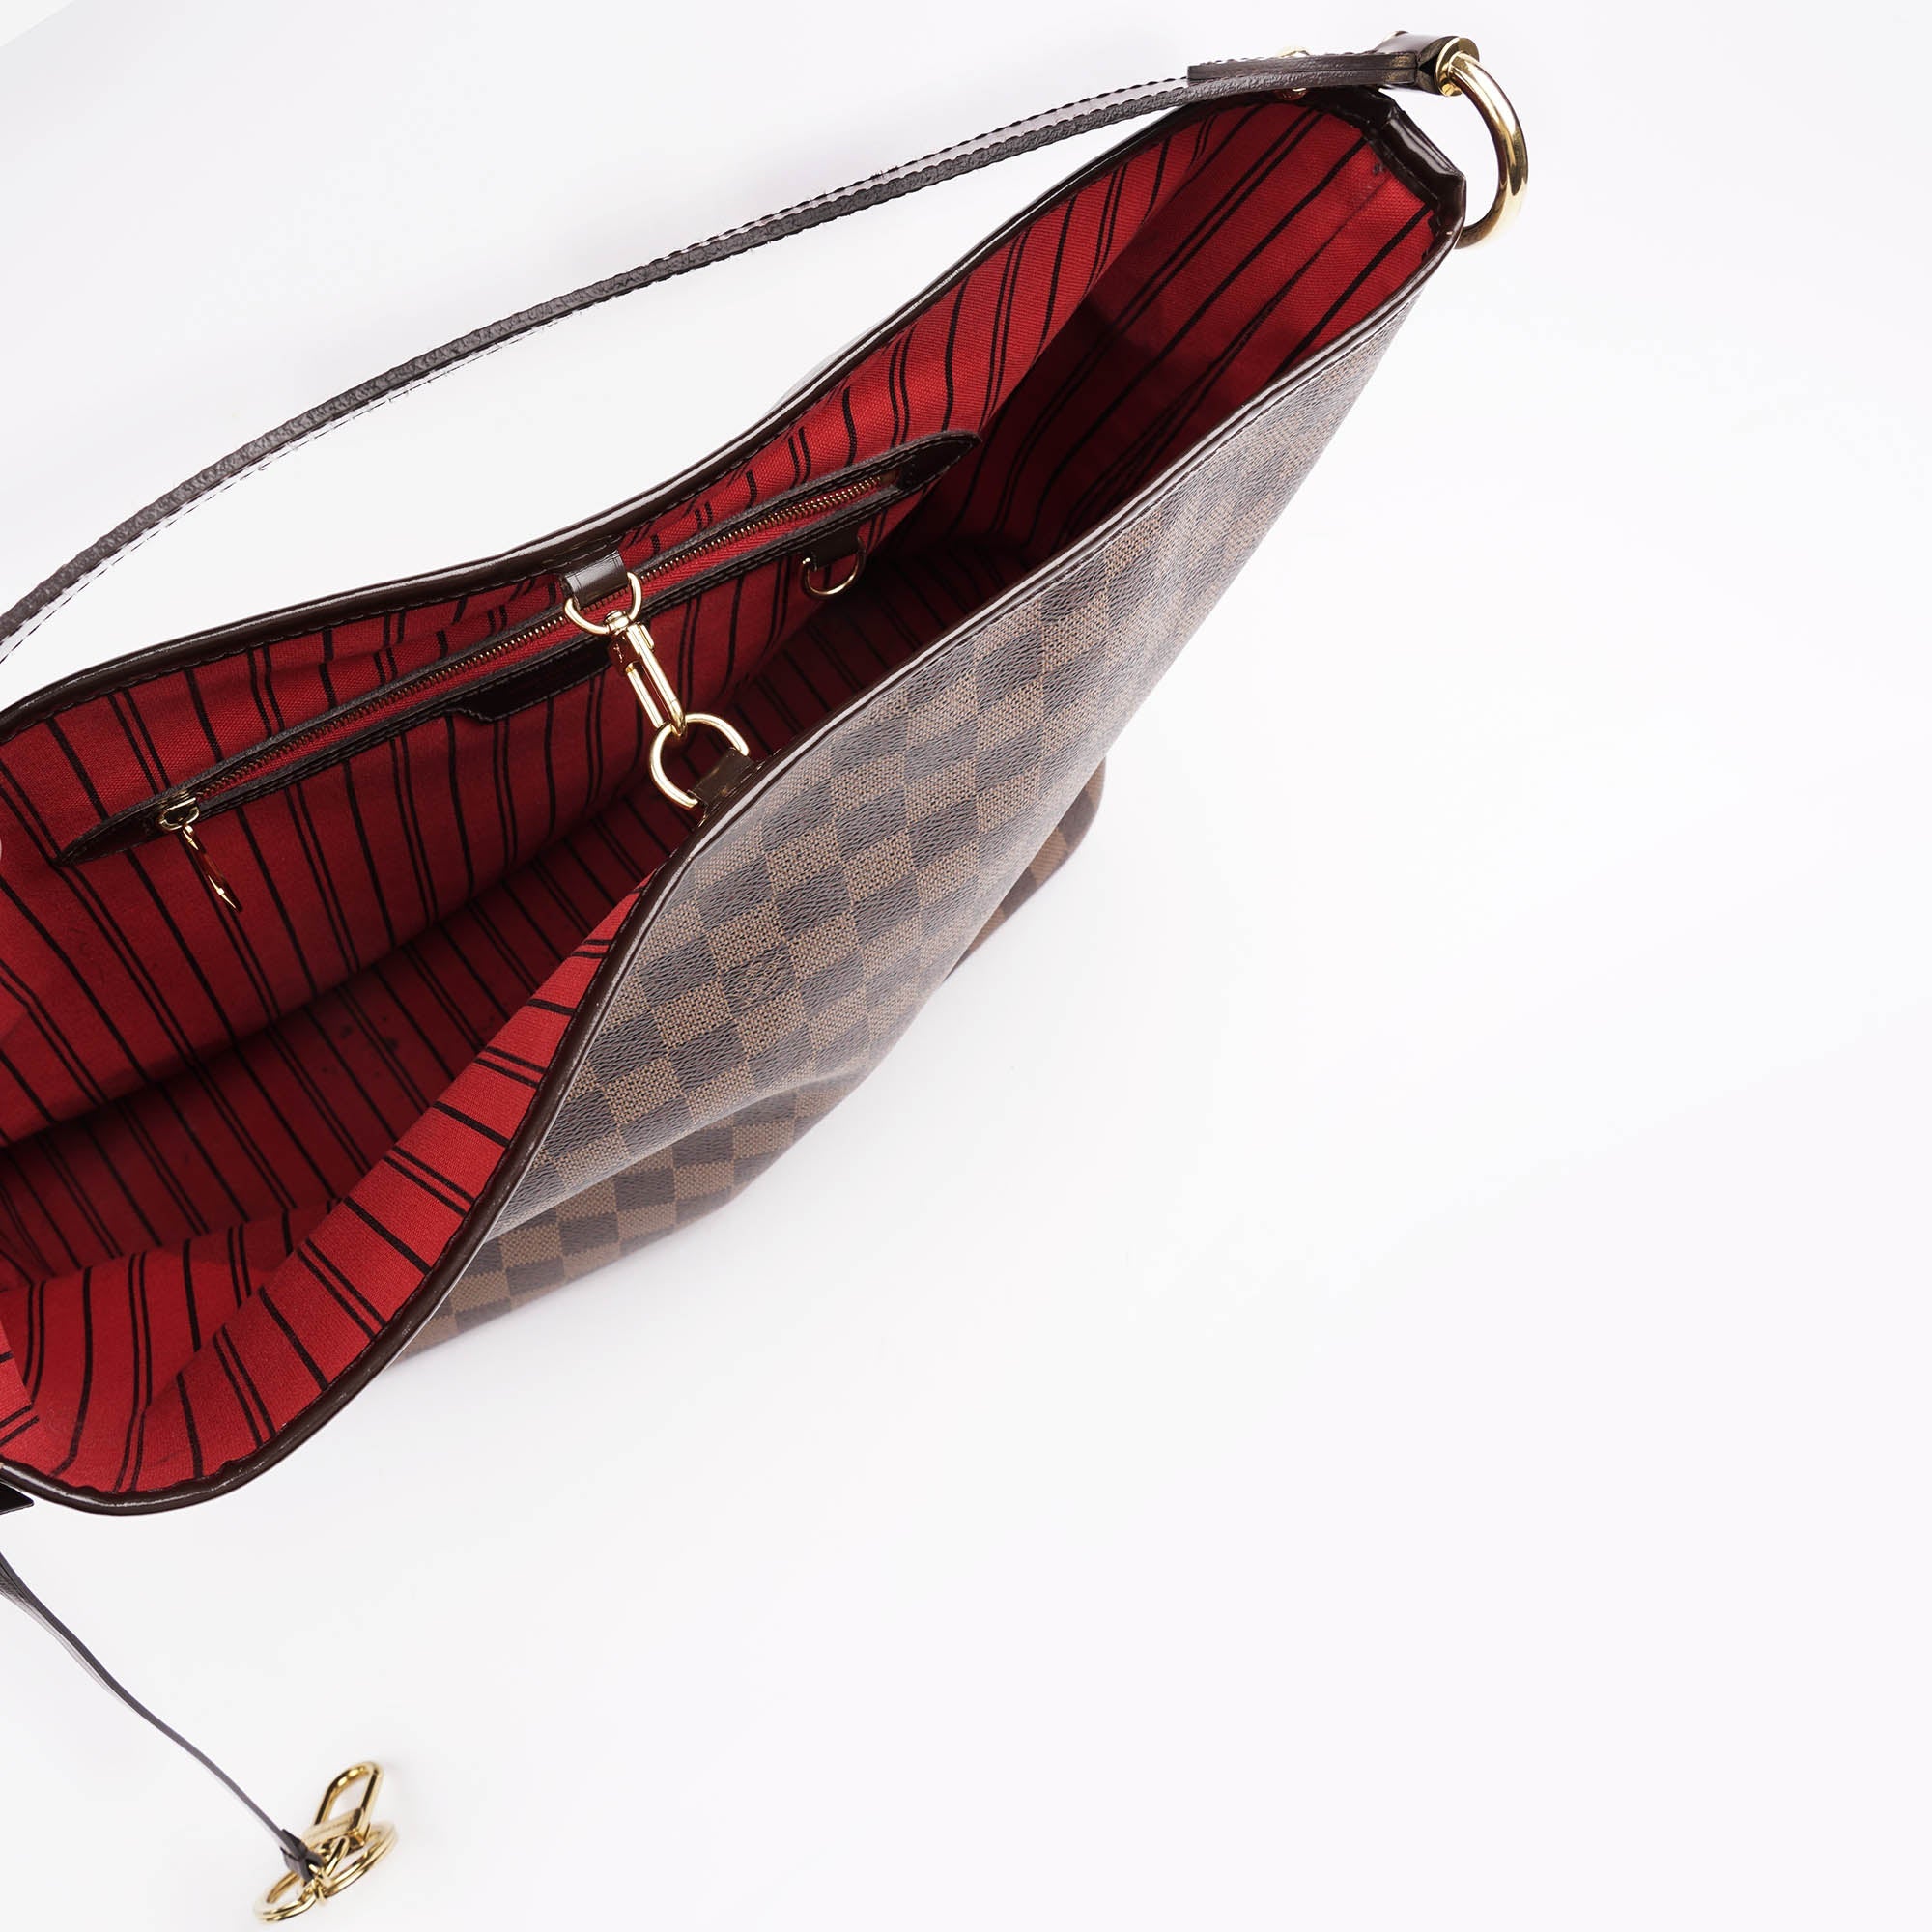 Delightful MM Shoulder Bag - LOUIS VUITTON - Affordable Luxury image